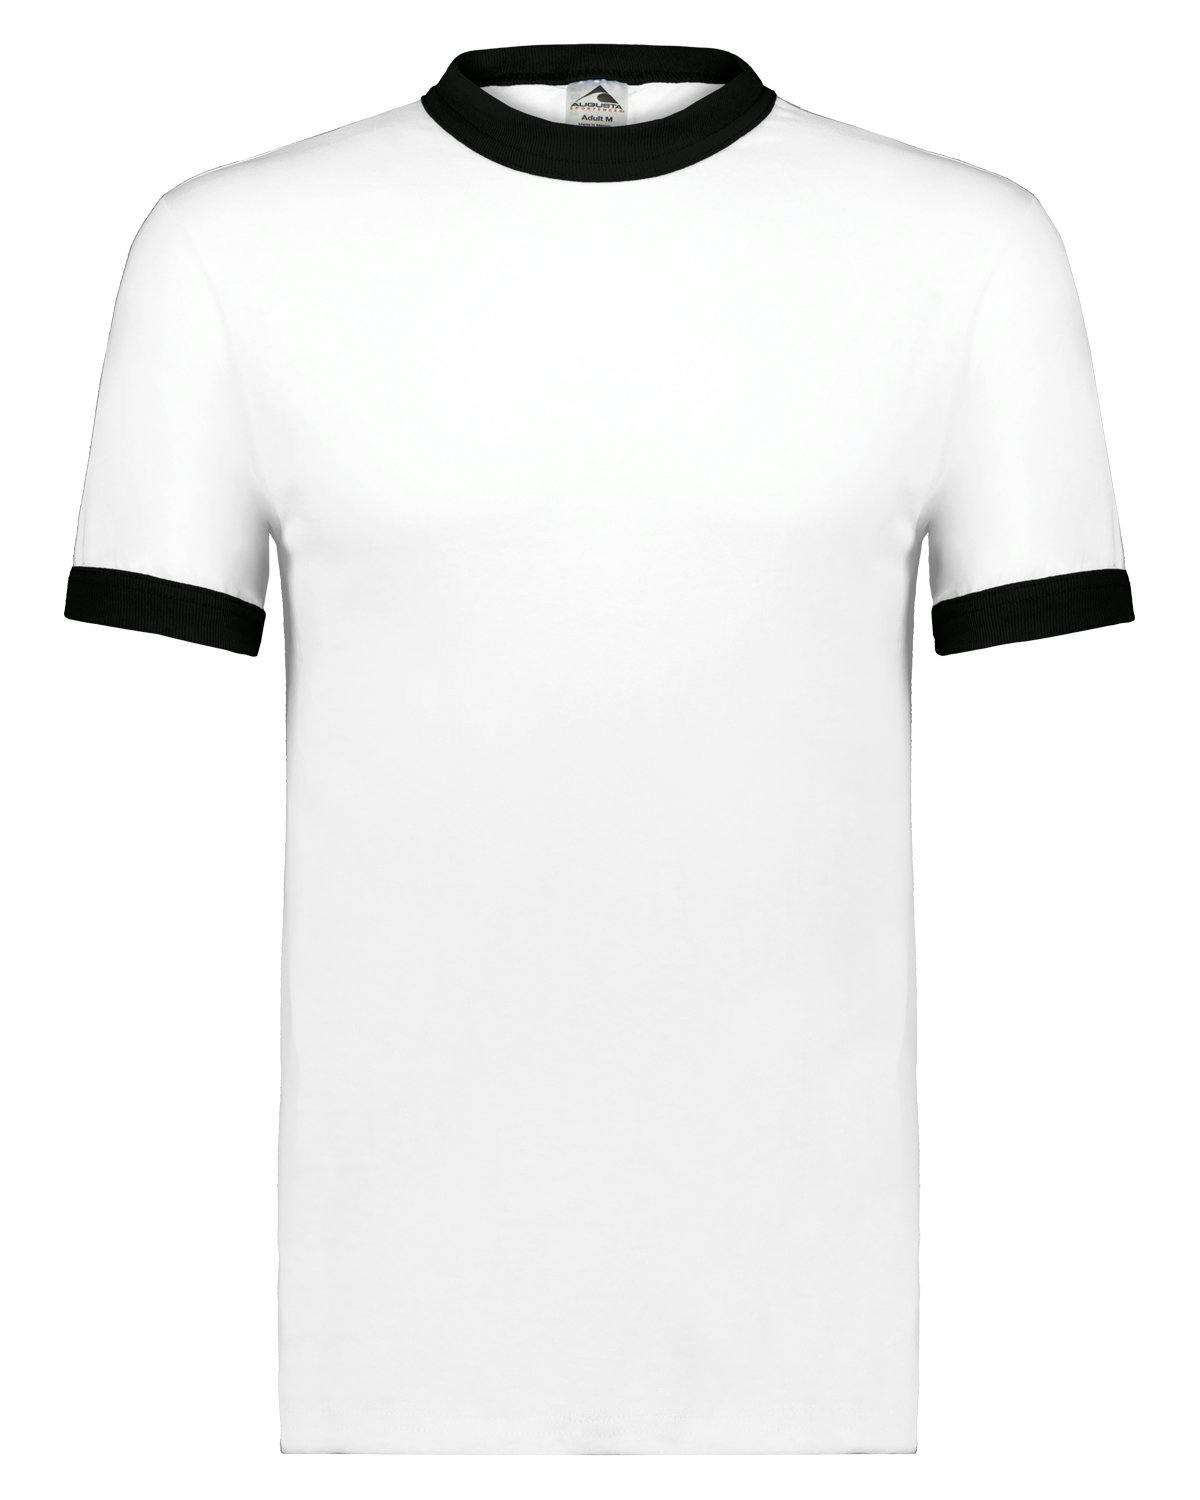 Image for Adult Ringer T-Shirt